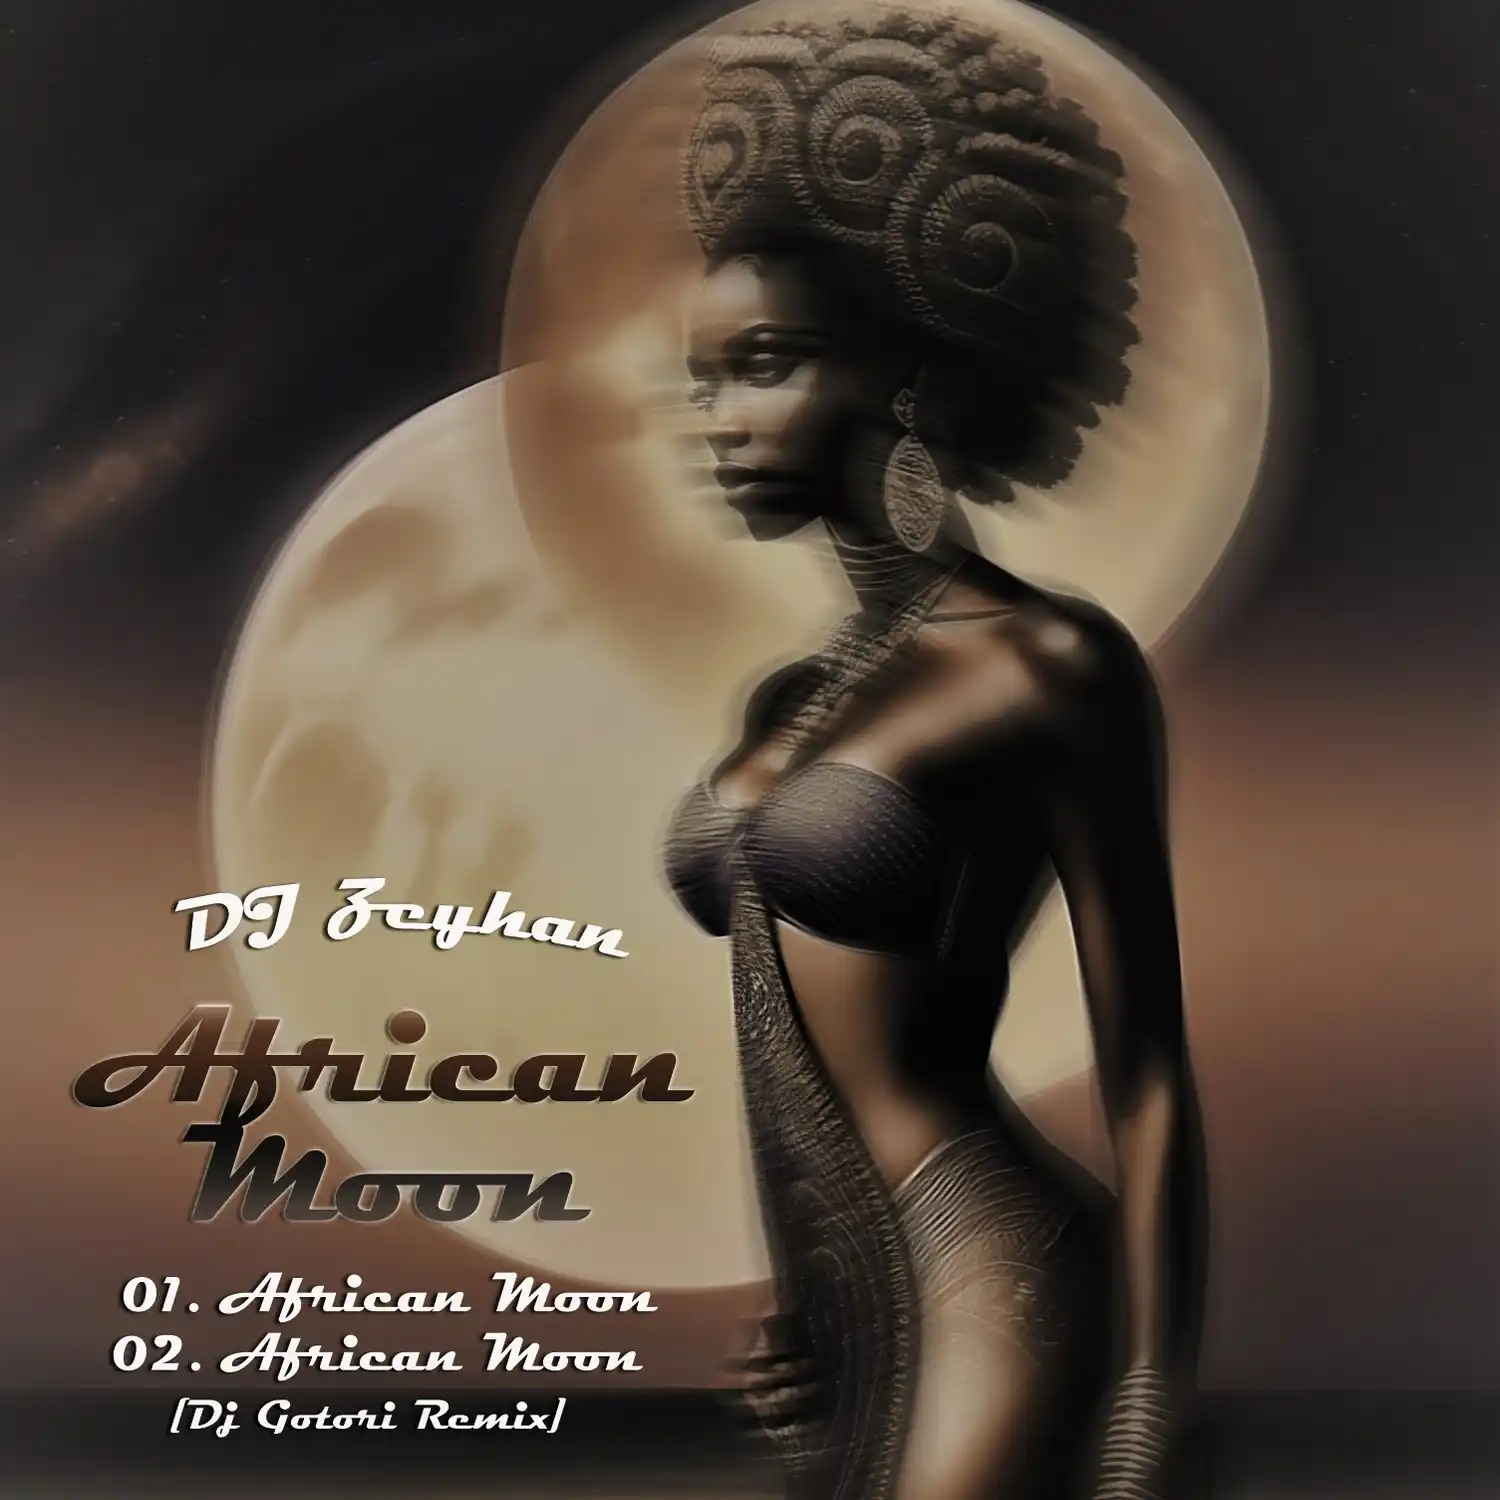 GS004 - DJ Zeyhan - African Moon